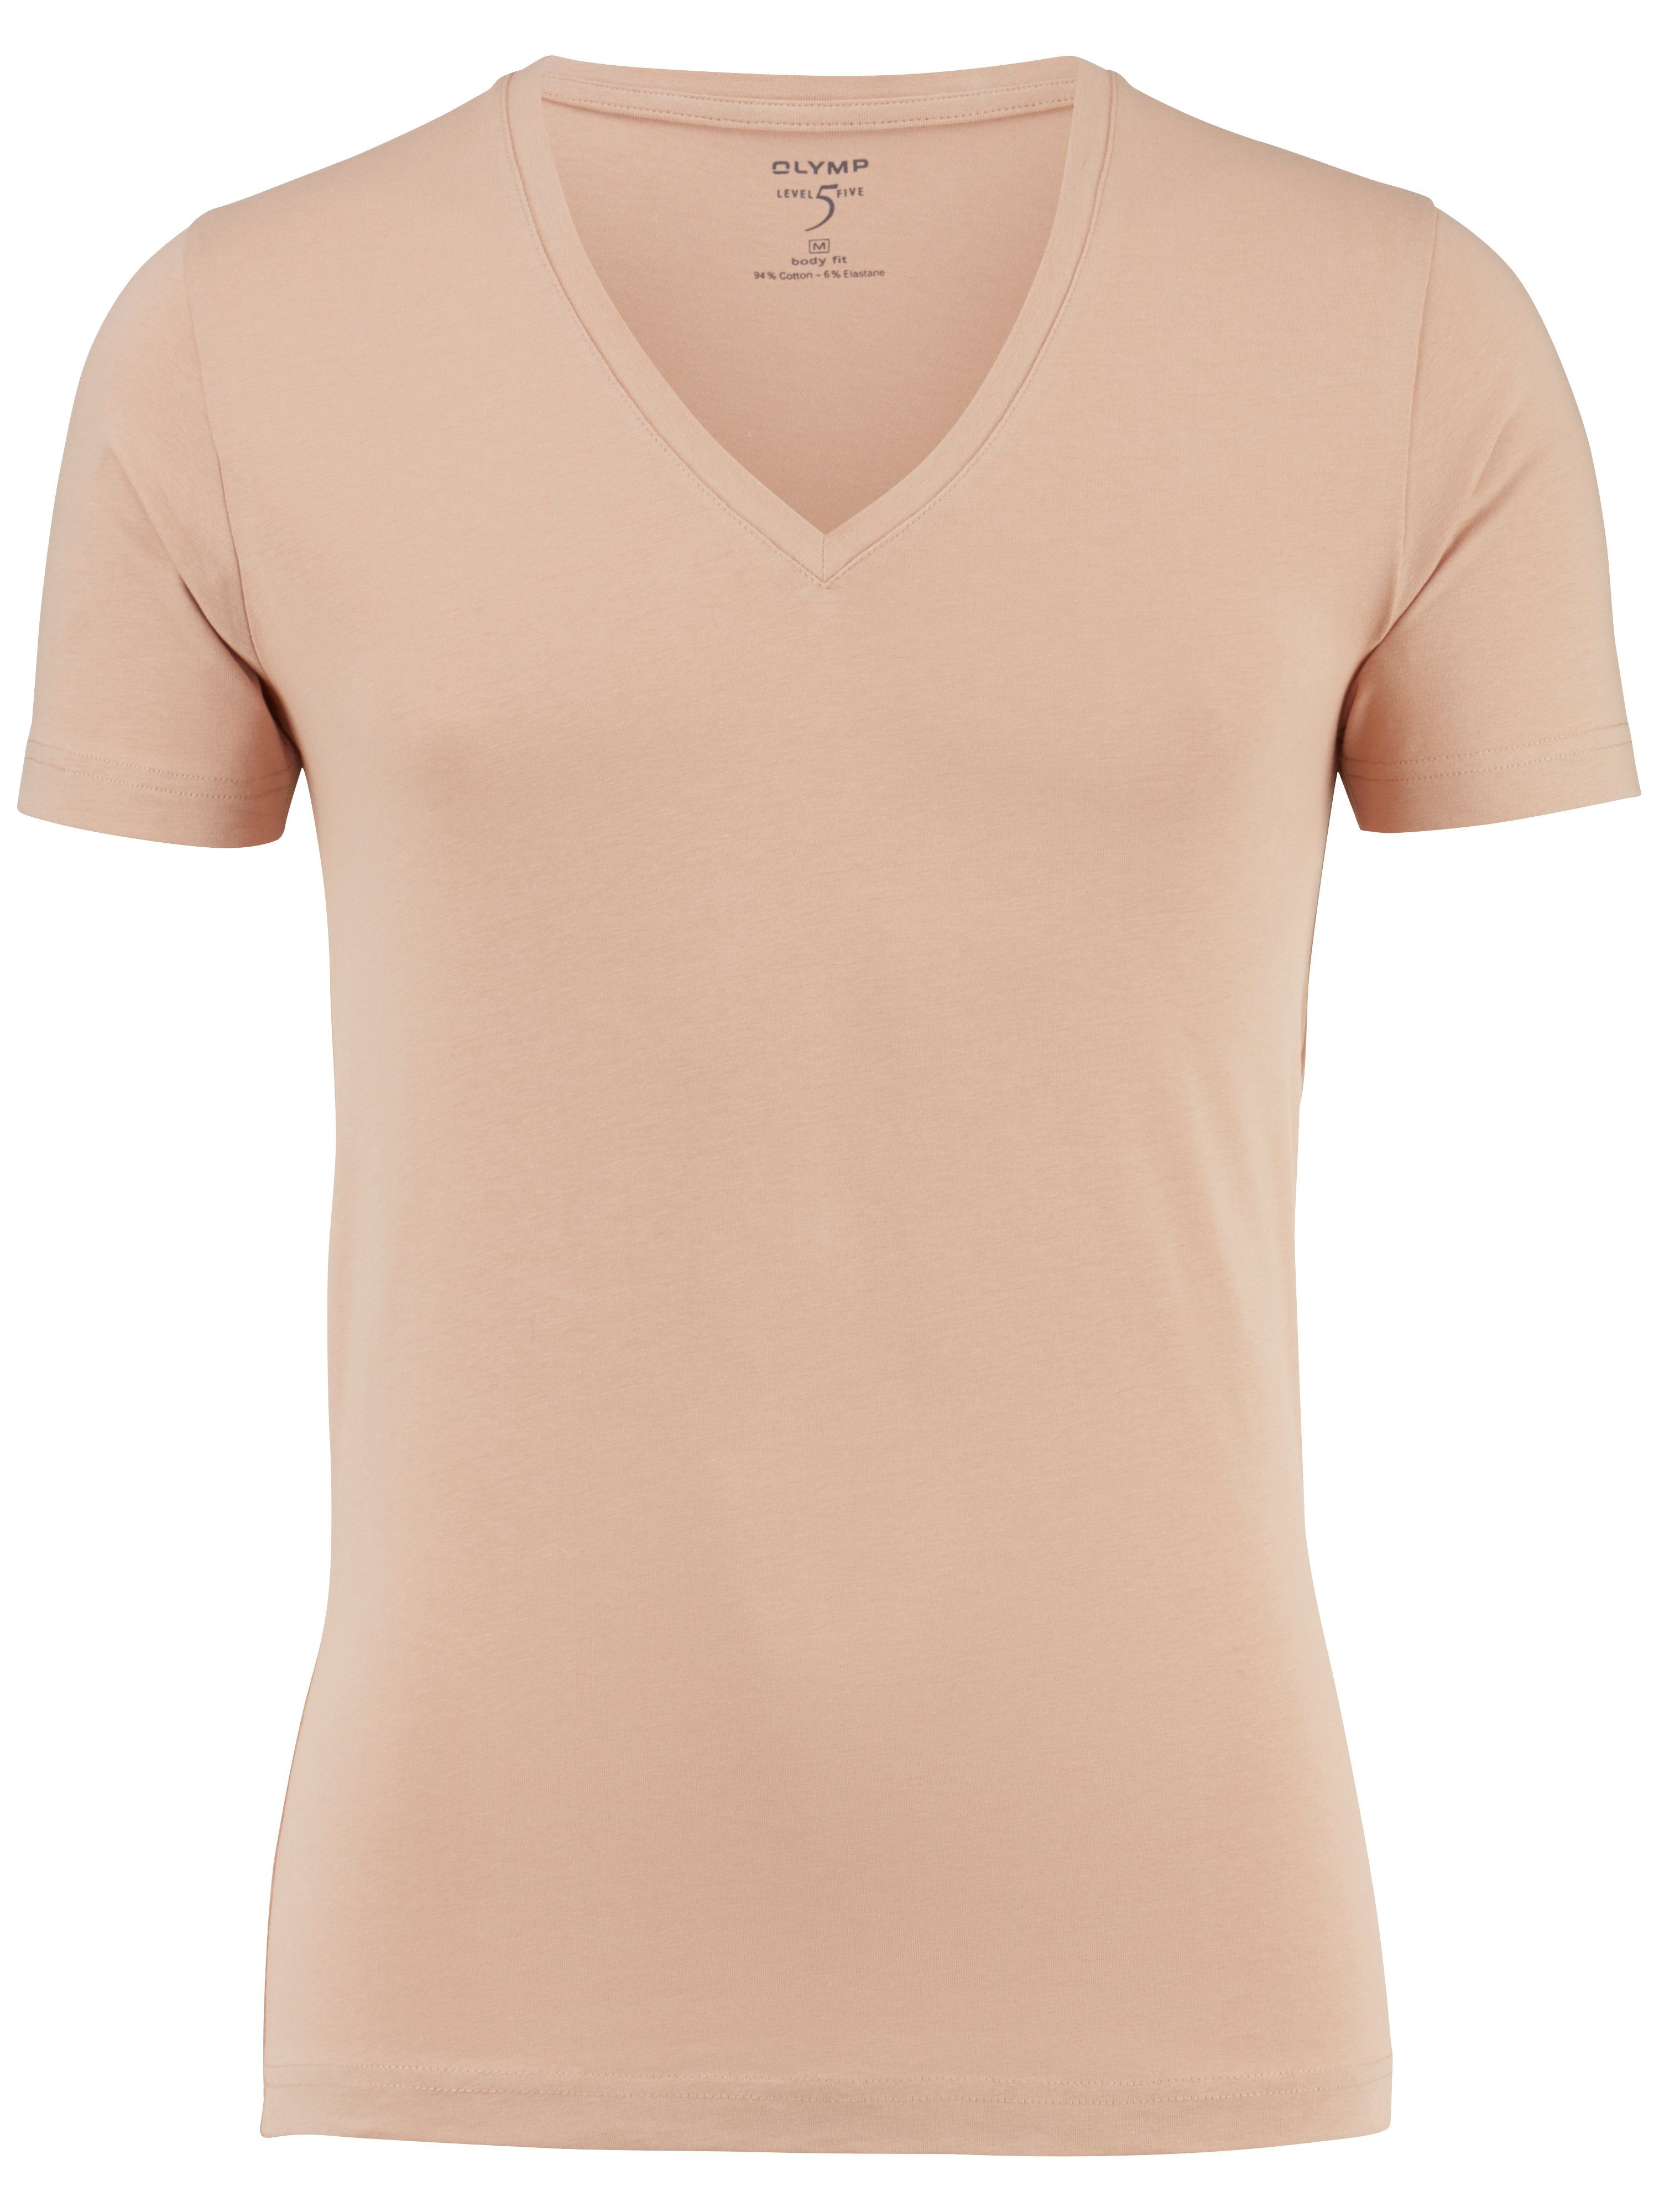 5 OLYMP Level caramel T-Shirt fit body